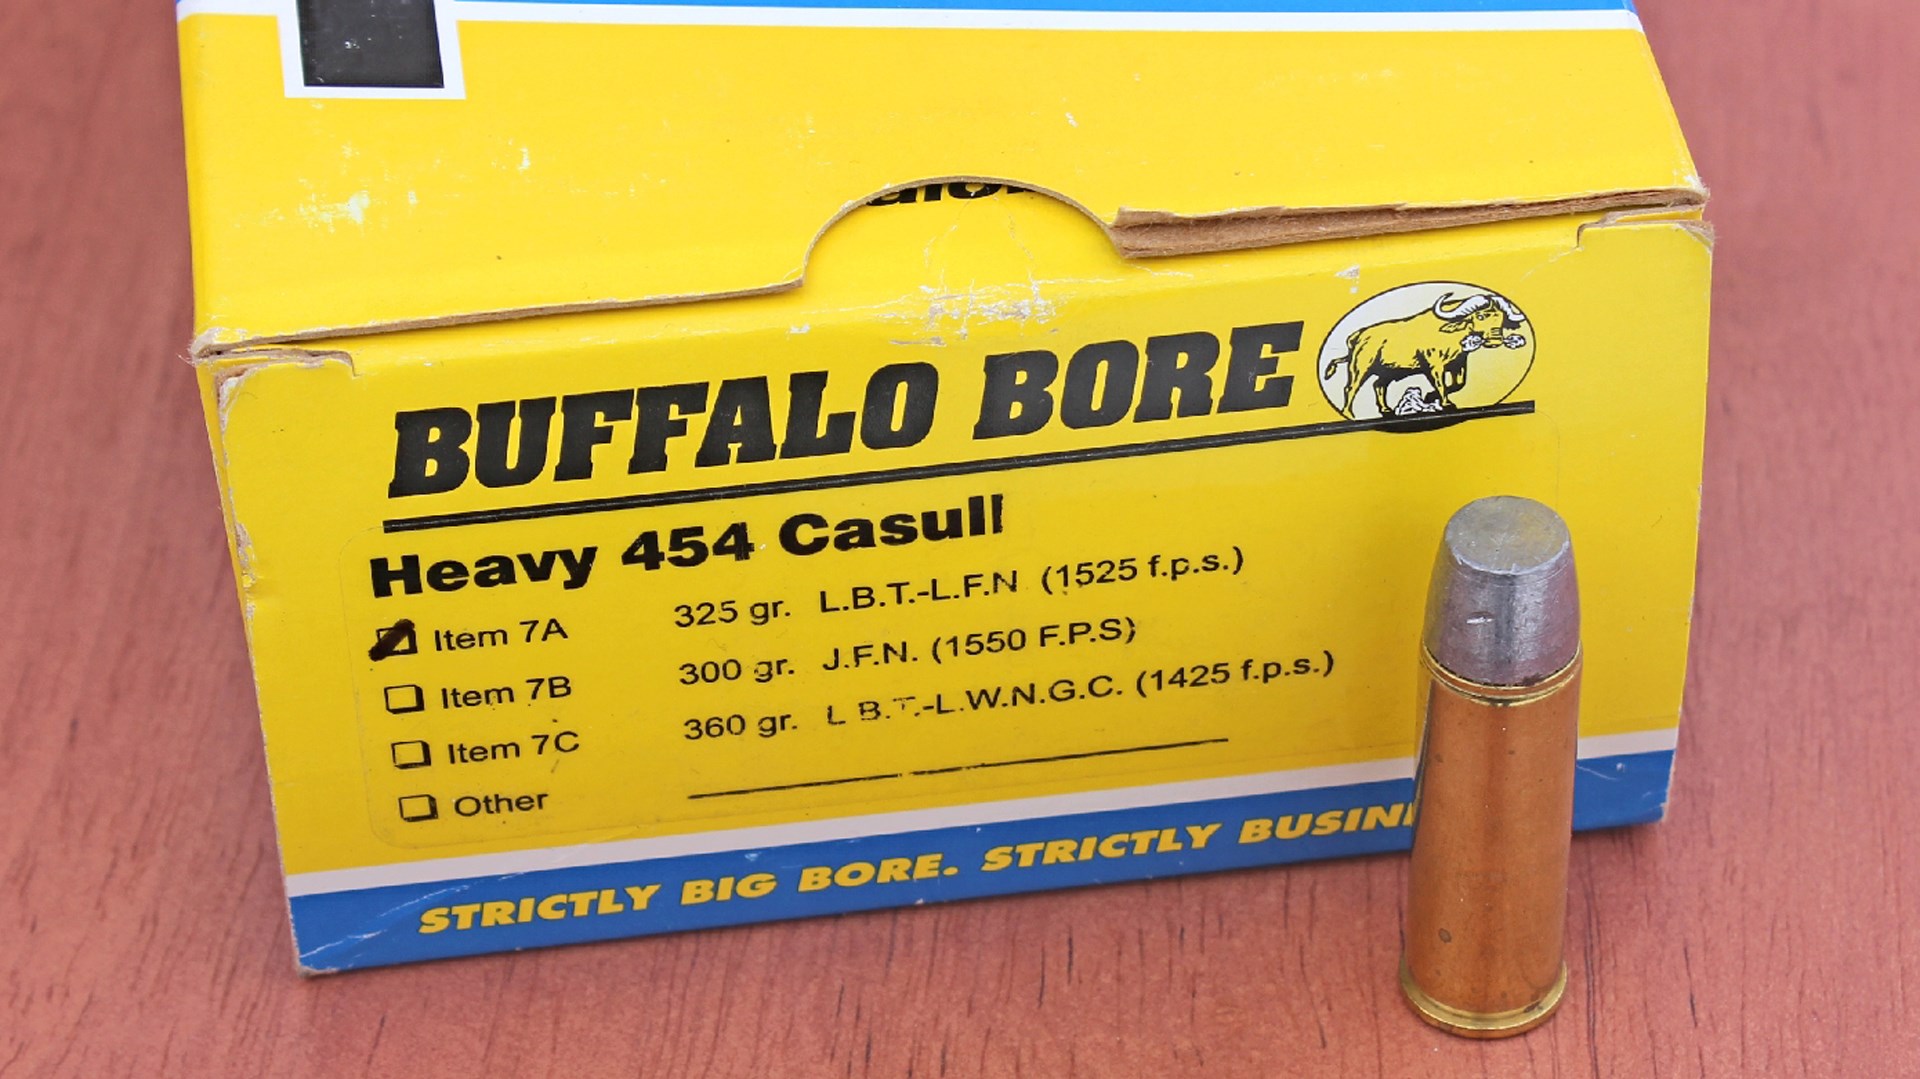 buffalo bore ammunition box yellow blue heavy 454 casull ammo bullet cartridge